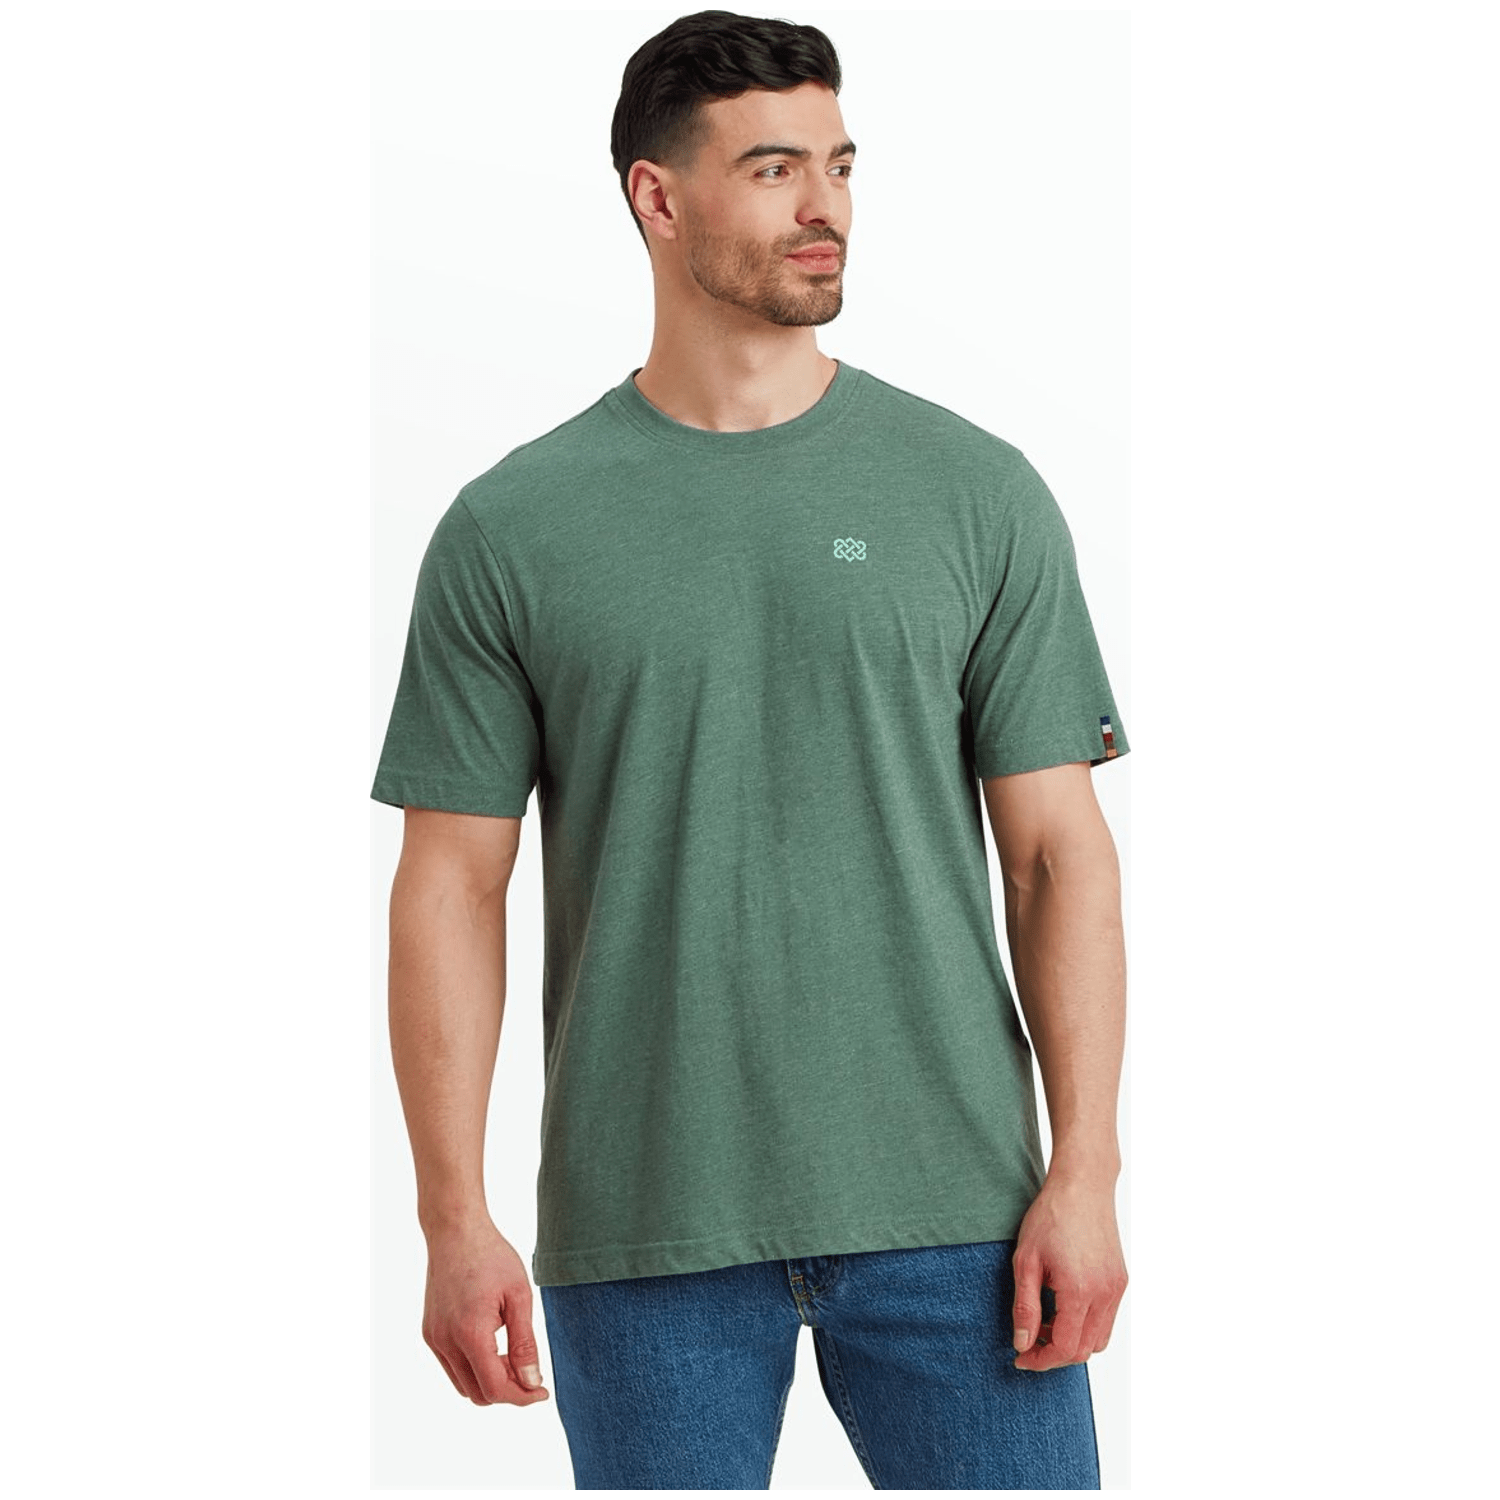 Sherpa Terrain T-Shirt